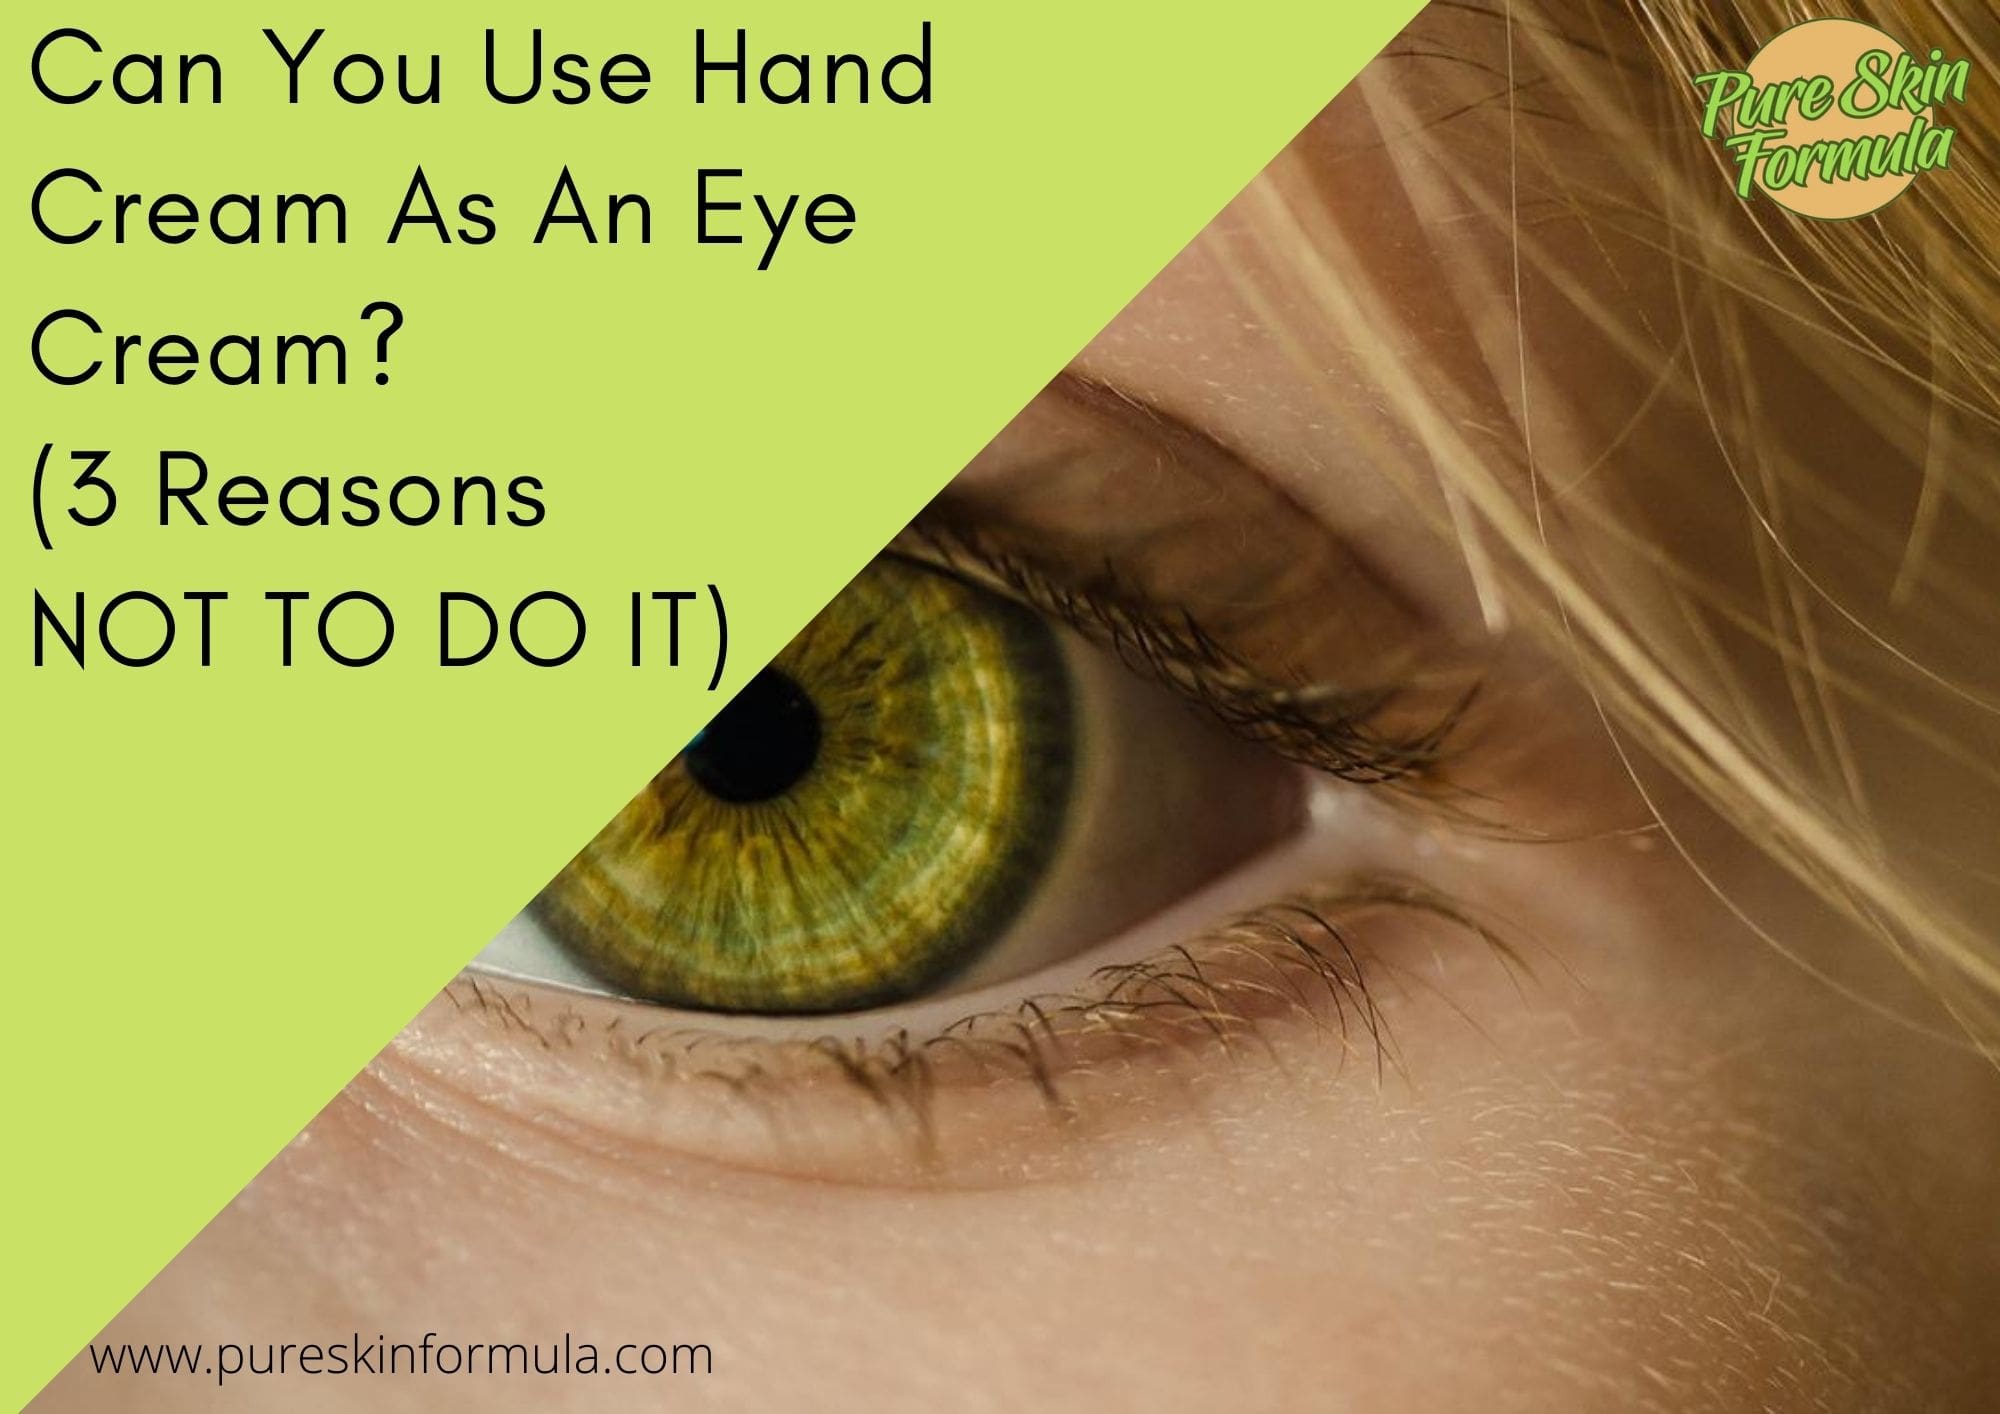 Can you use hand cream as an eye cream